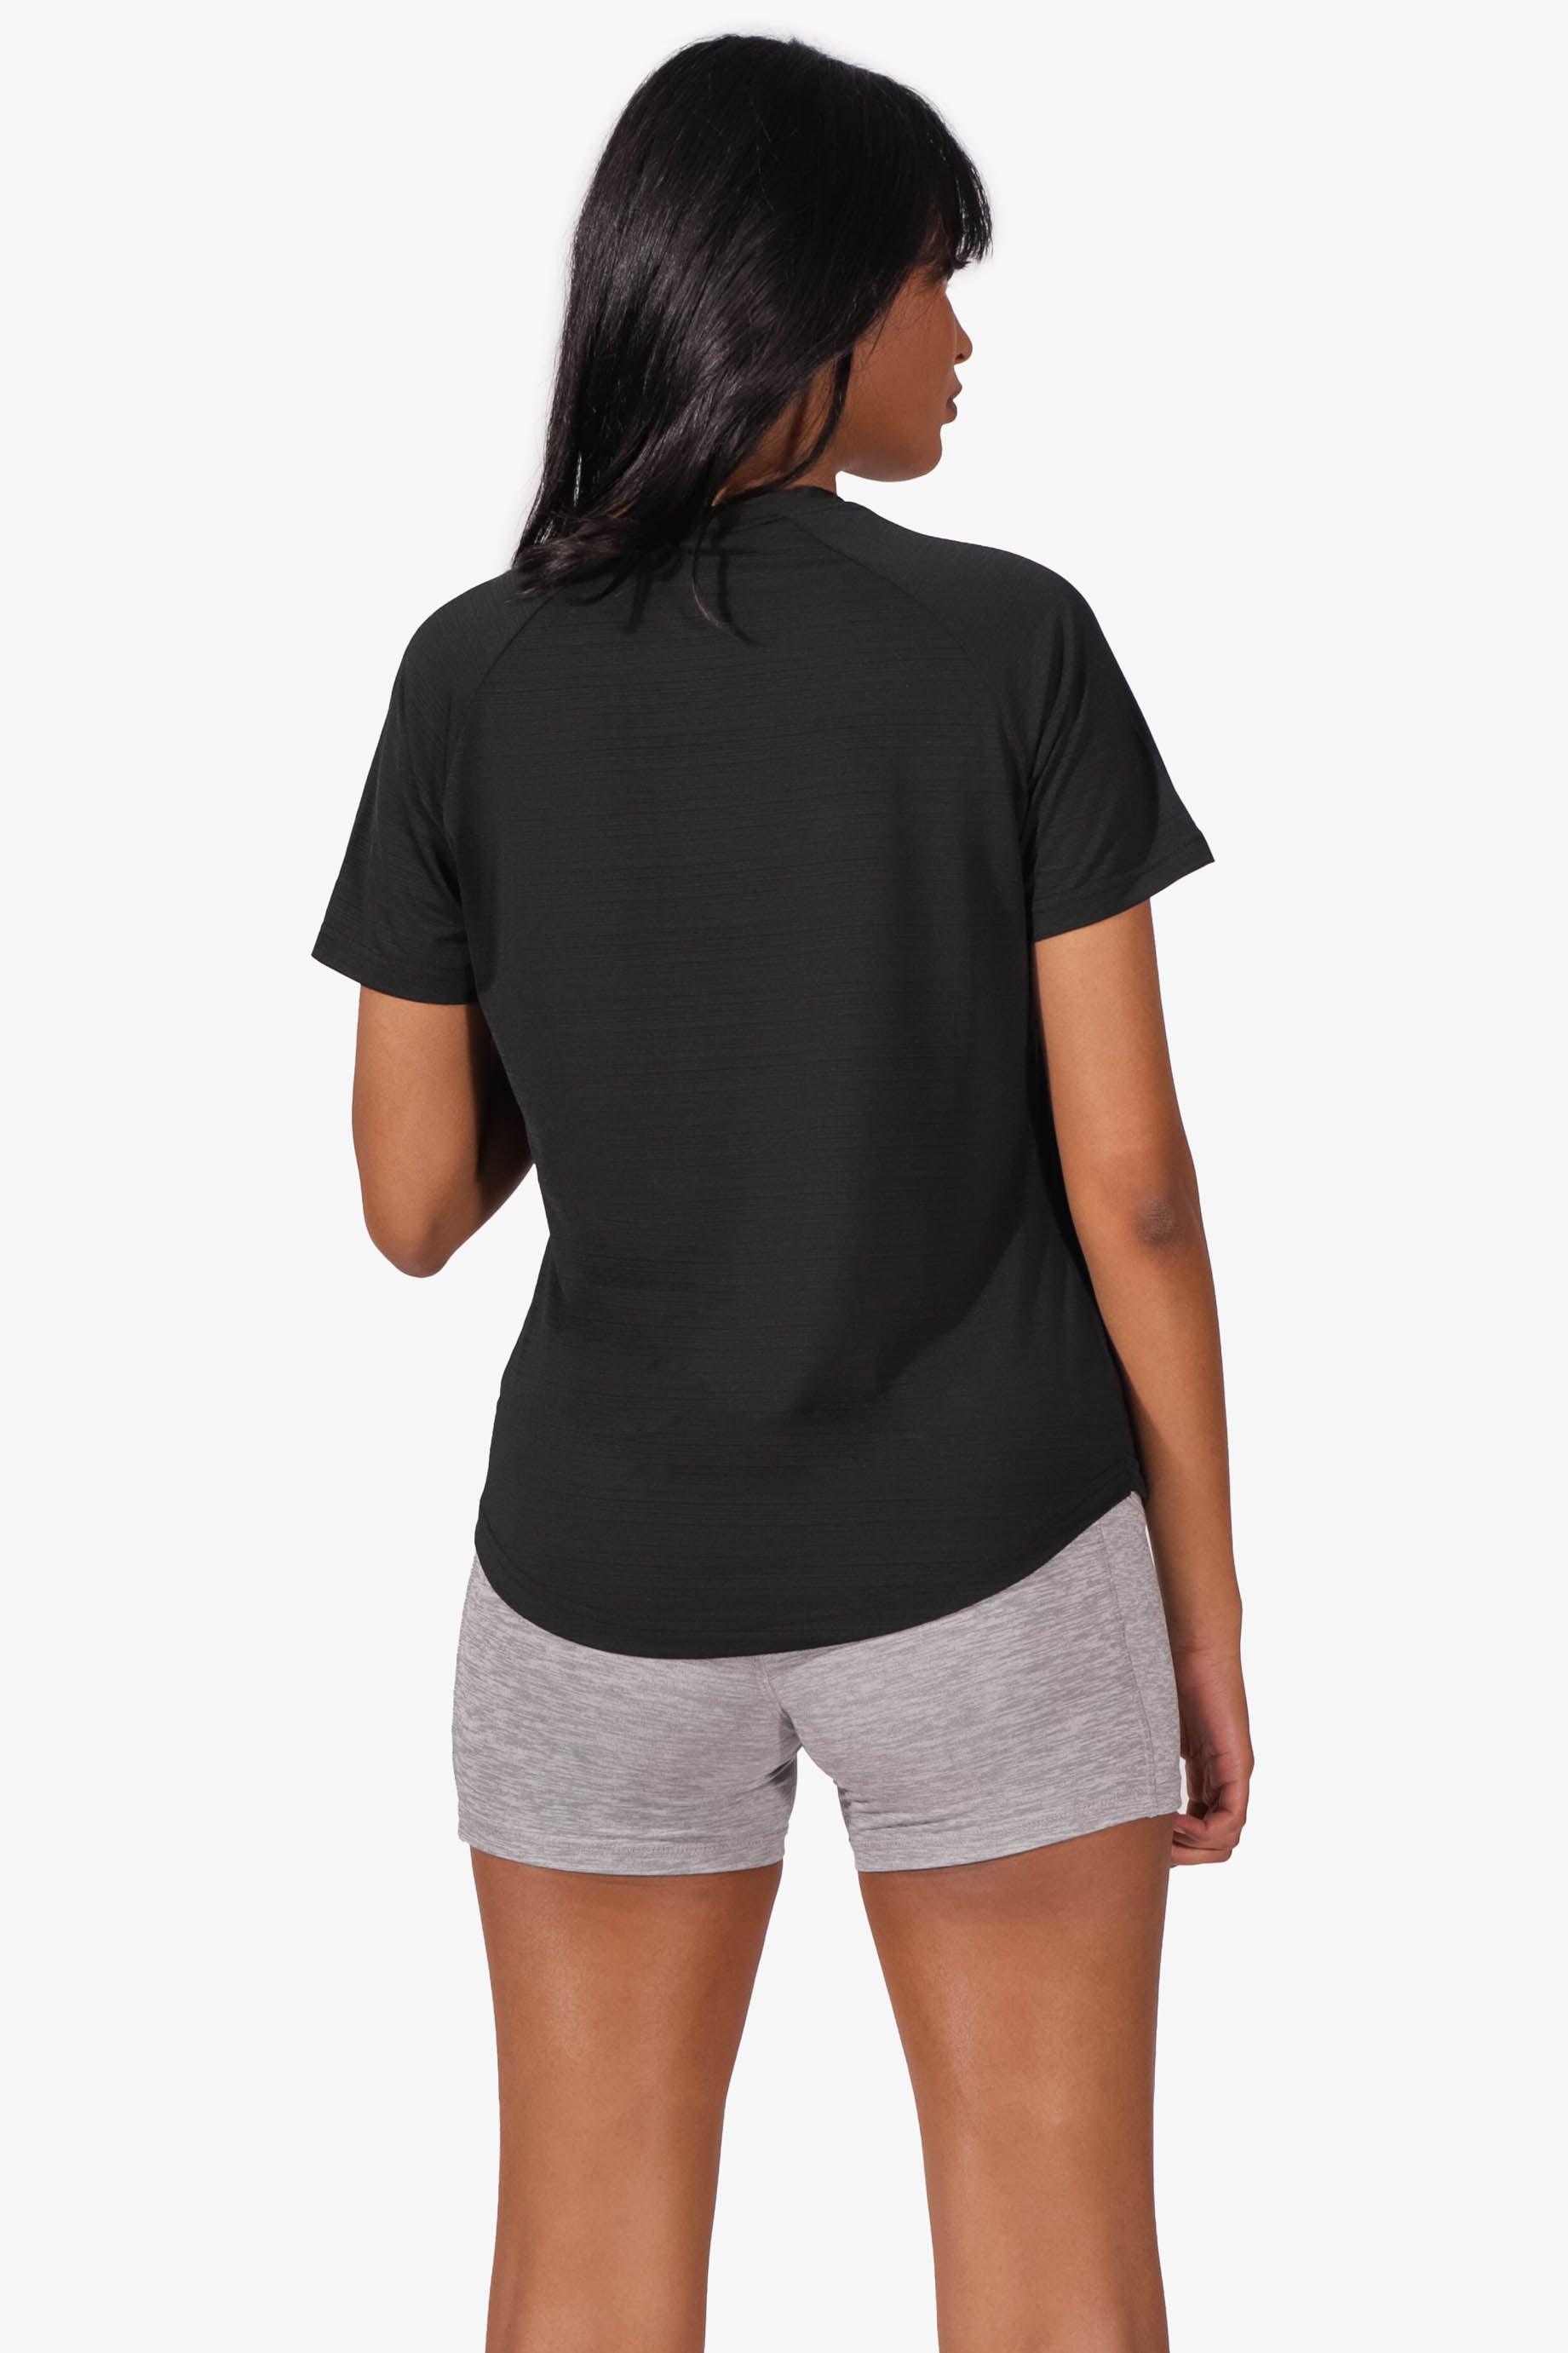 Full-Length Light-Weight Gym T-Shirt - Black (4609135837251)